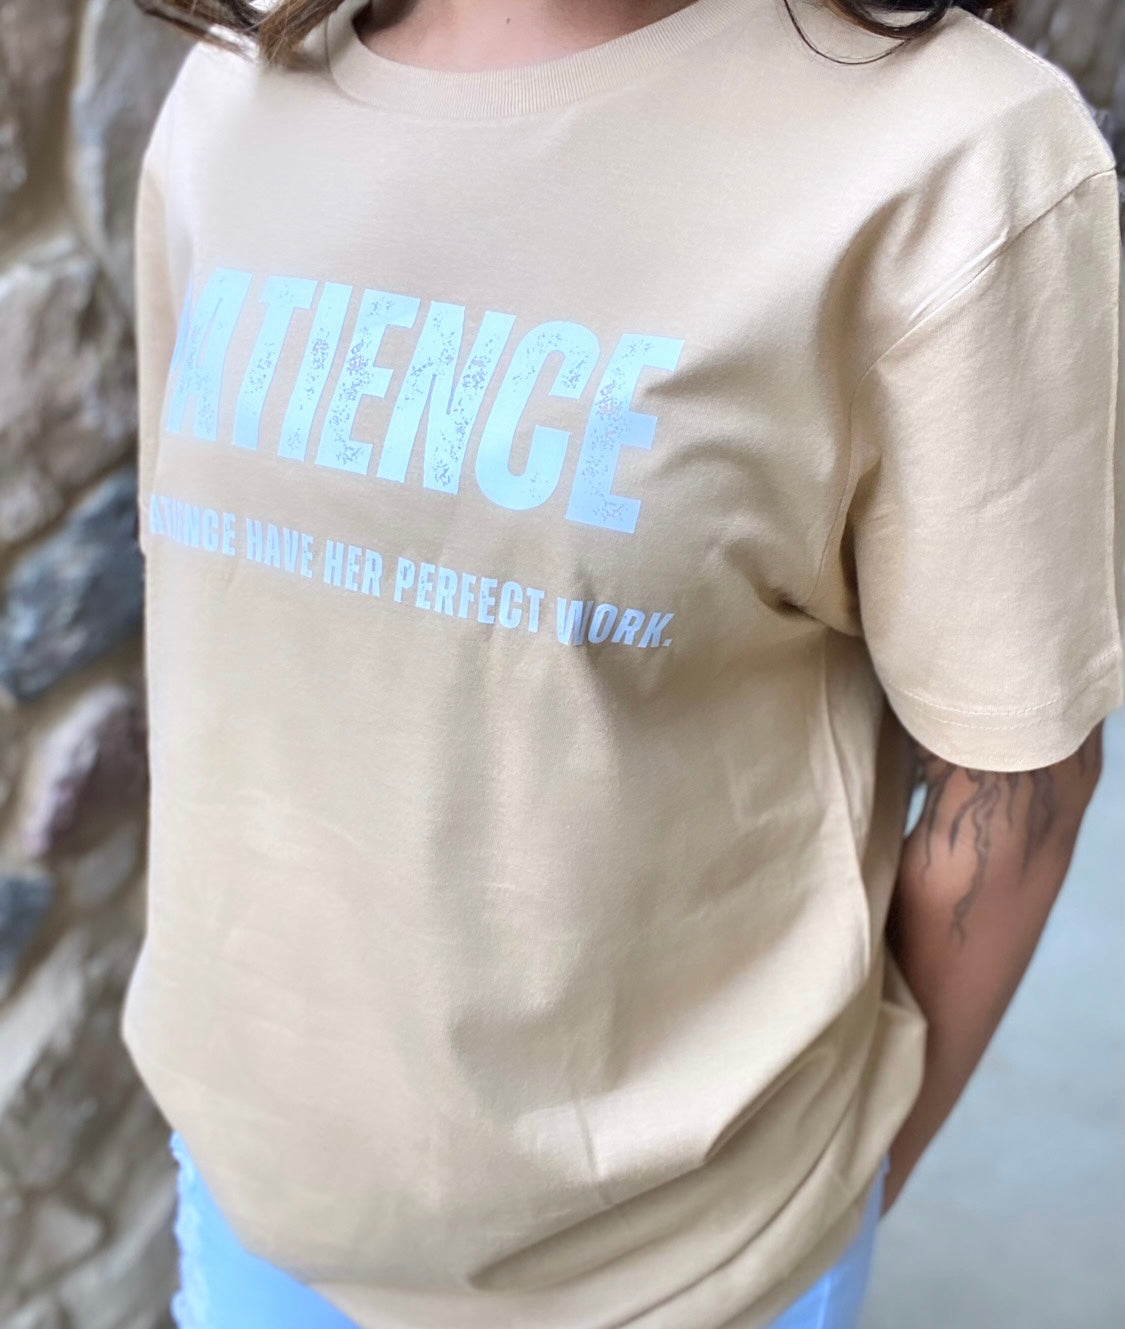 "Patience" T-Shirt